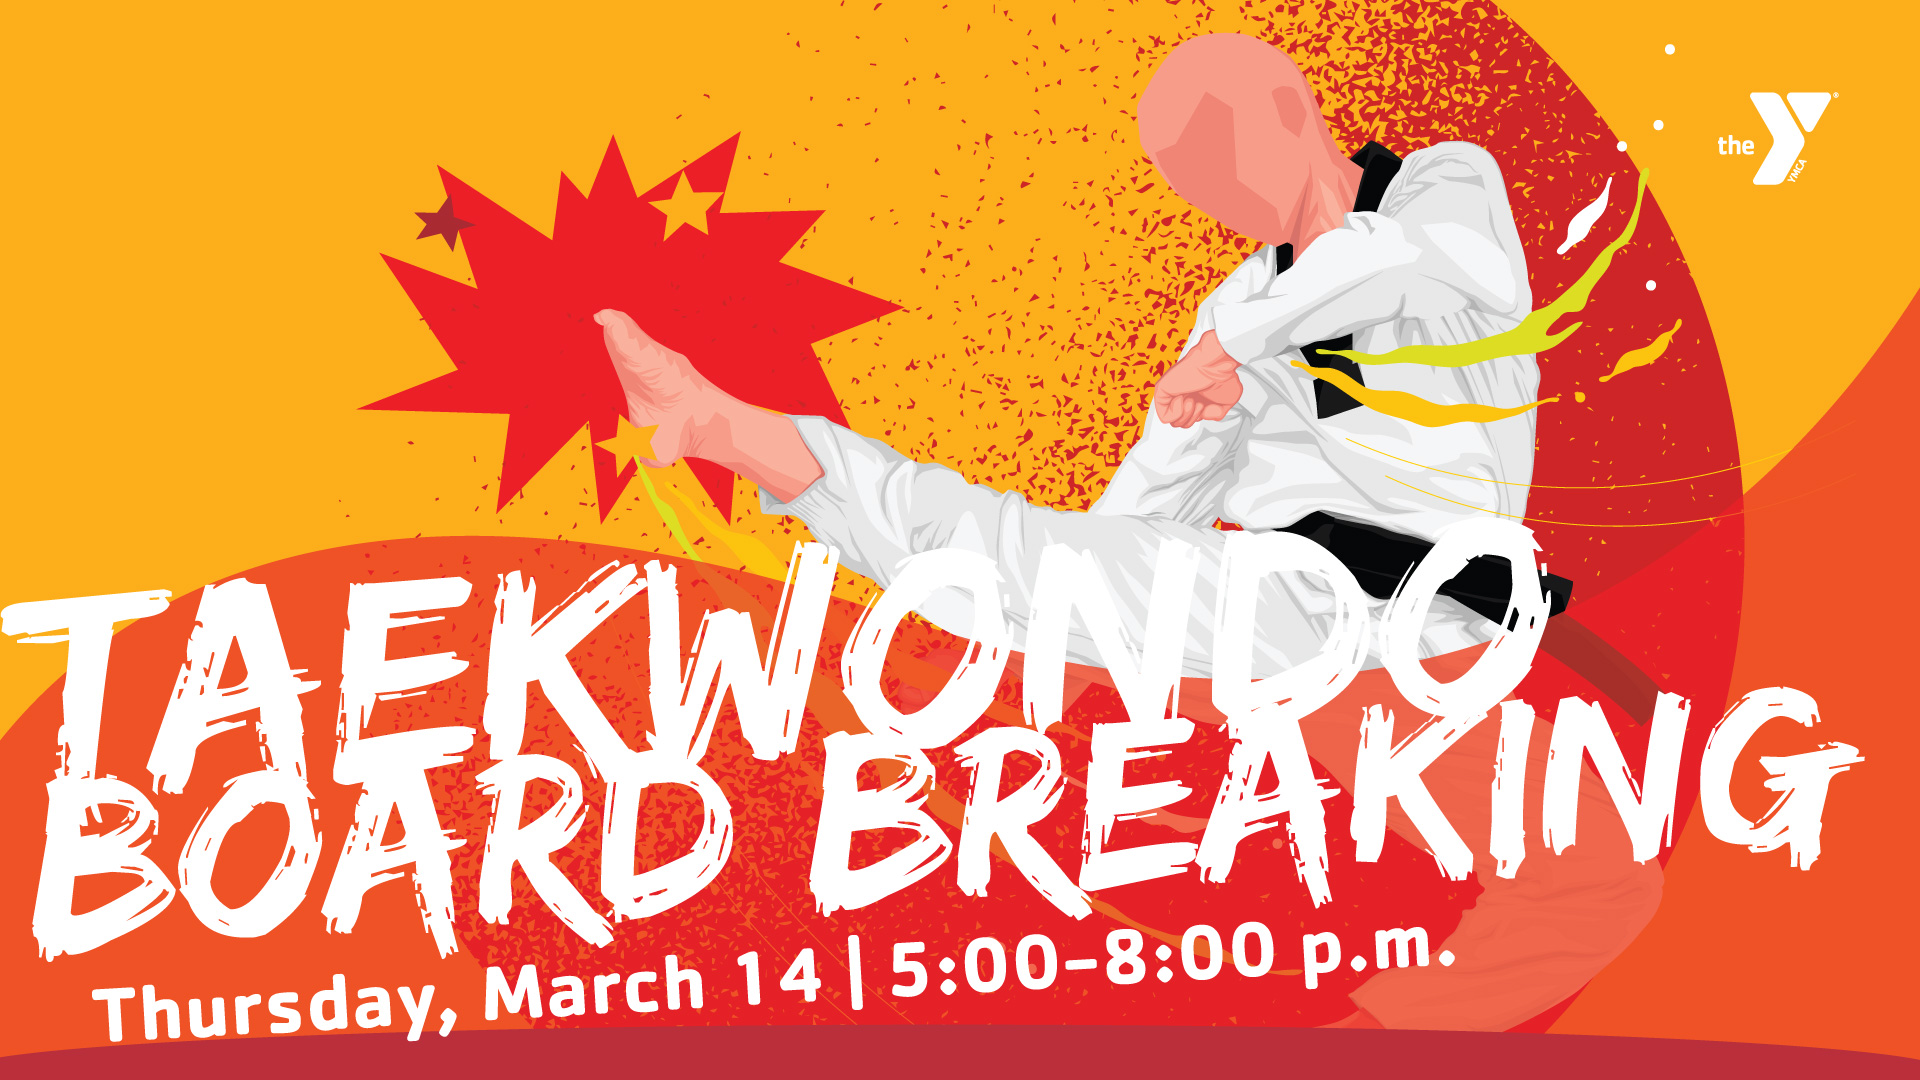 Featured image for “Taekwondo Board Breaking”